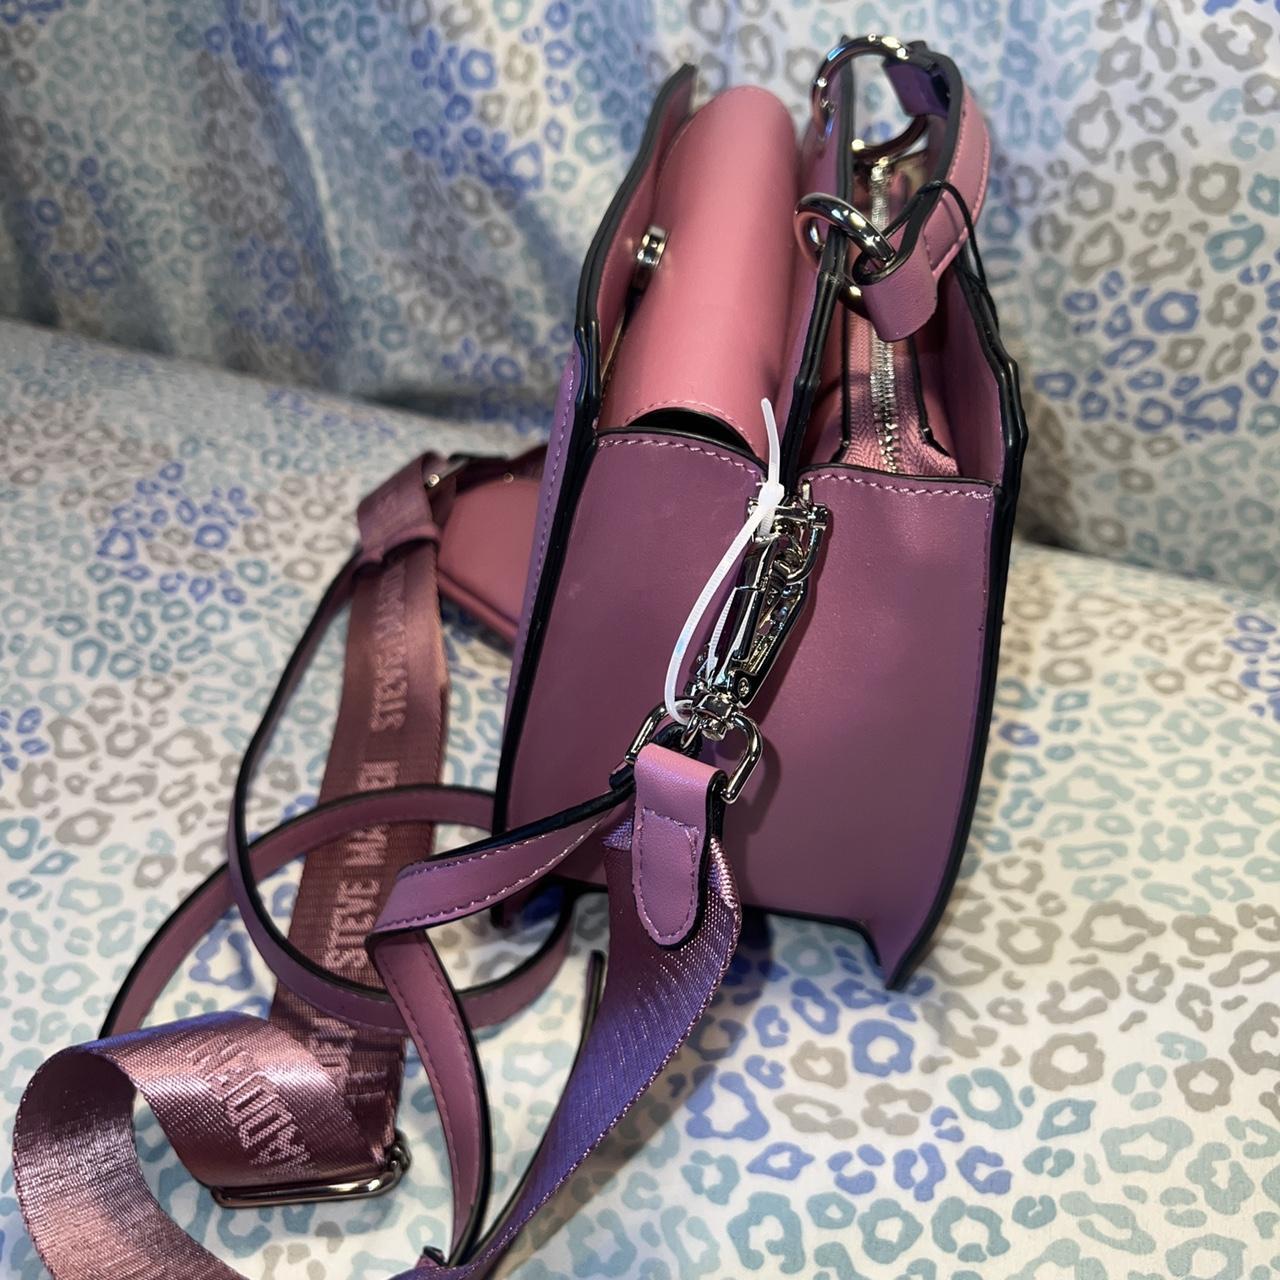 New Steve Madden Purse Hand Bag Satchel Purple